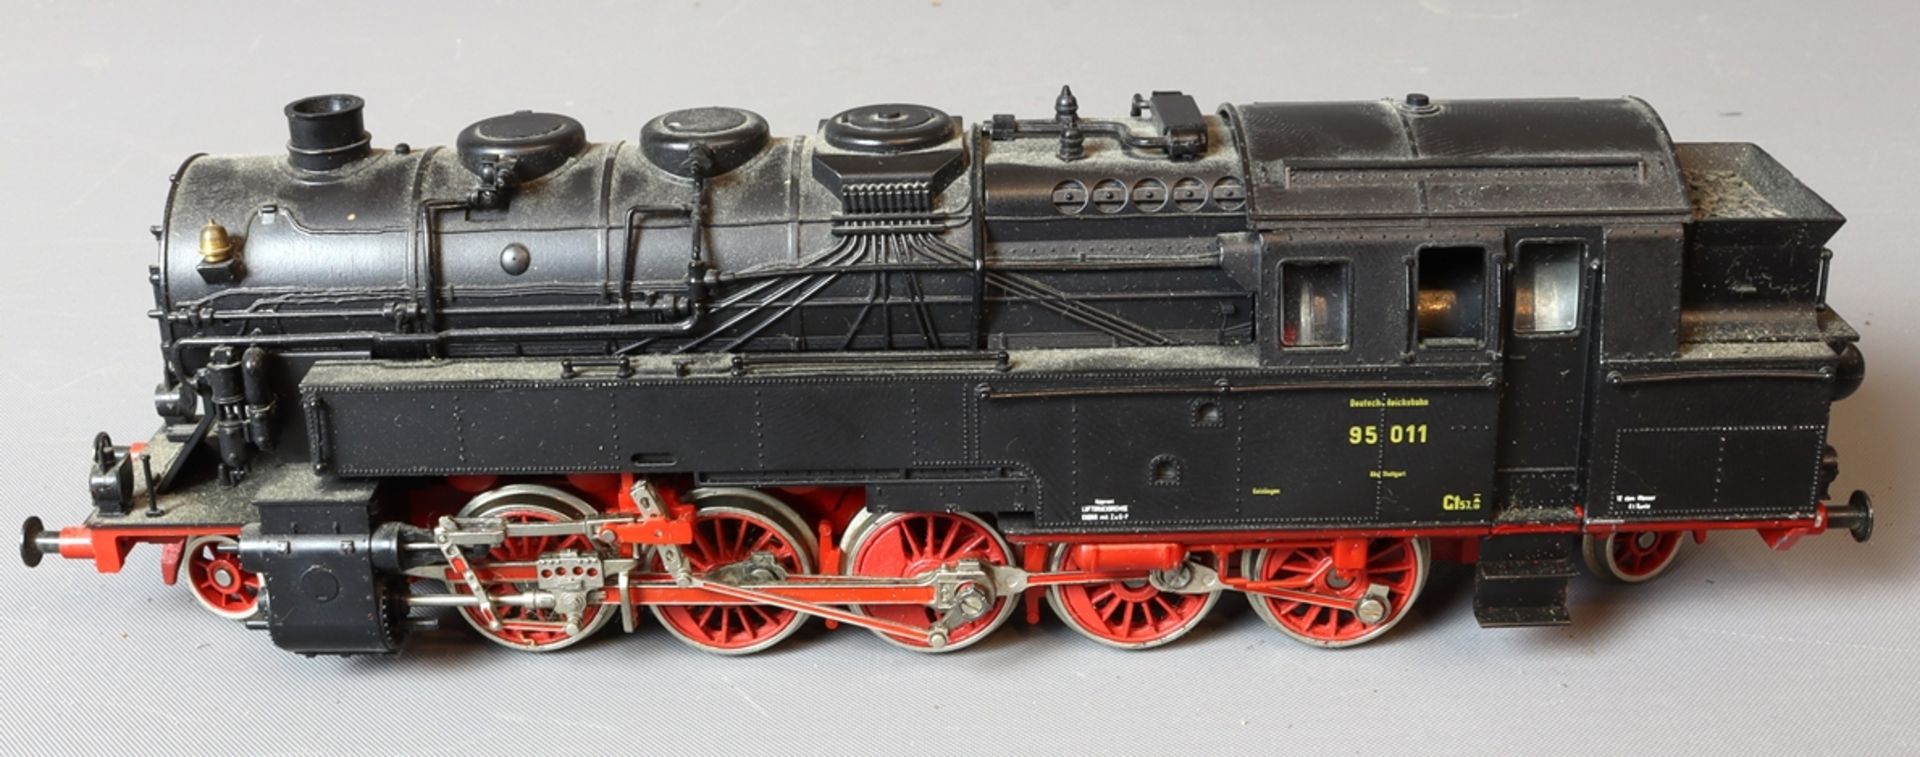 Liliput steam locomotive 95 011, second half of the 20th century, Austria